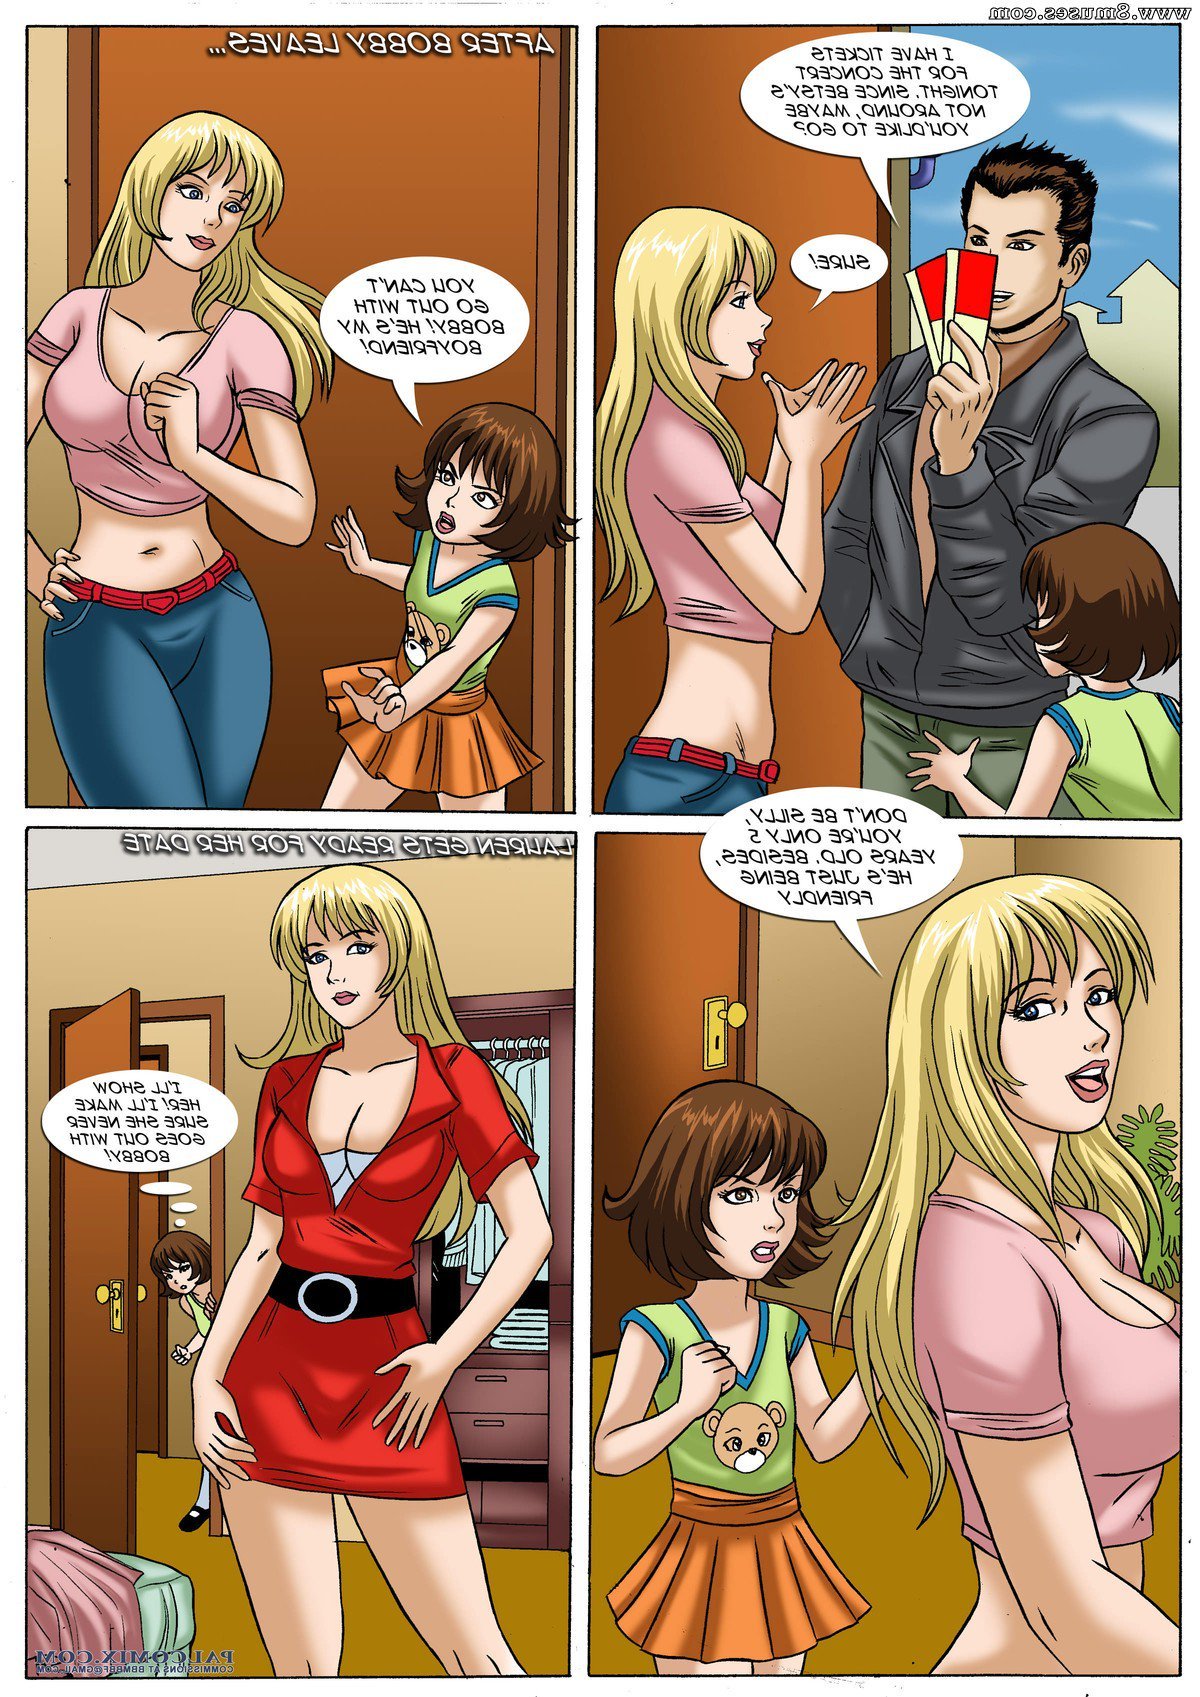 Girls Gone Child - Issue 2 Sex Comics